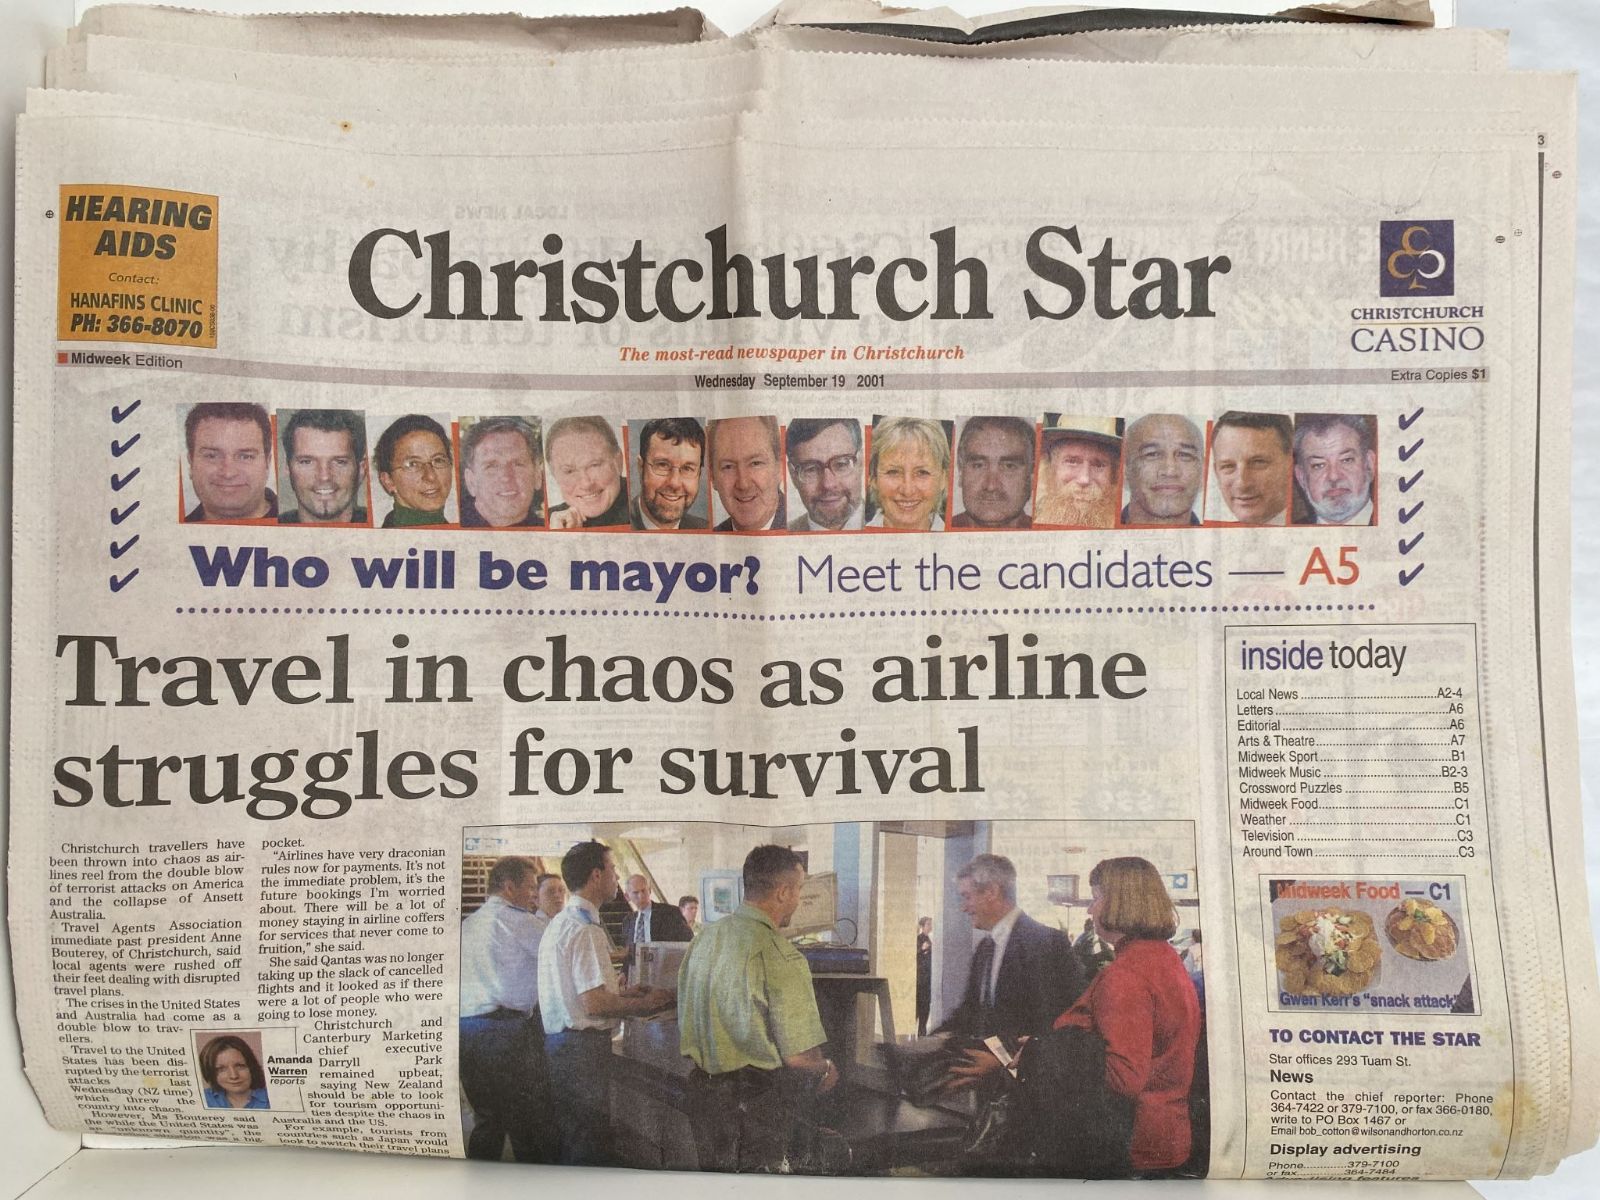 OLD NEWSPAPER: Christchurch Star 19 September 2001 - 9/11 Terror Attacks